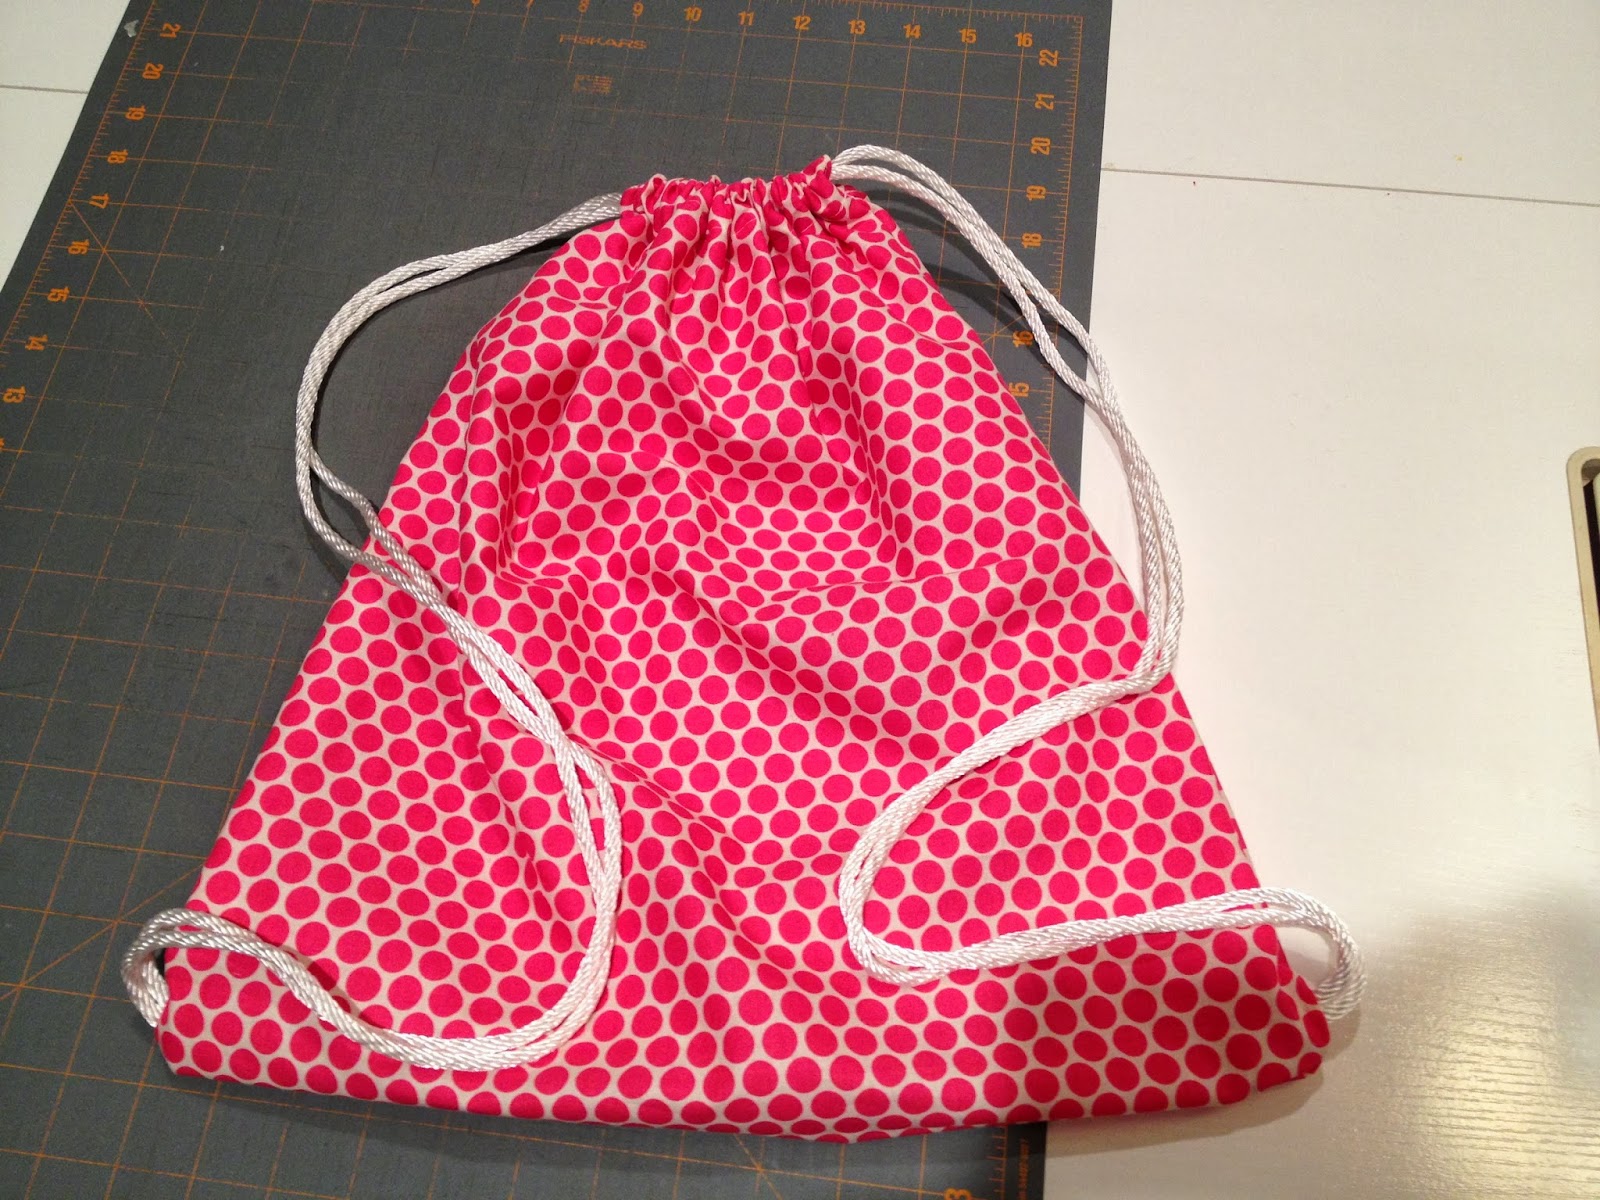 19 DIY Drawstring Backpack Patterns You Can Make